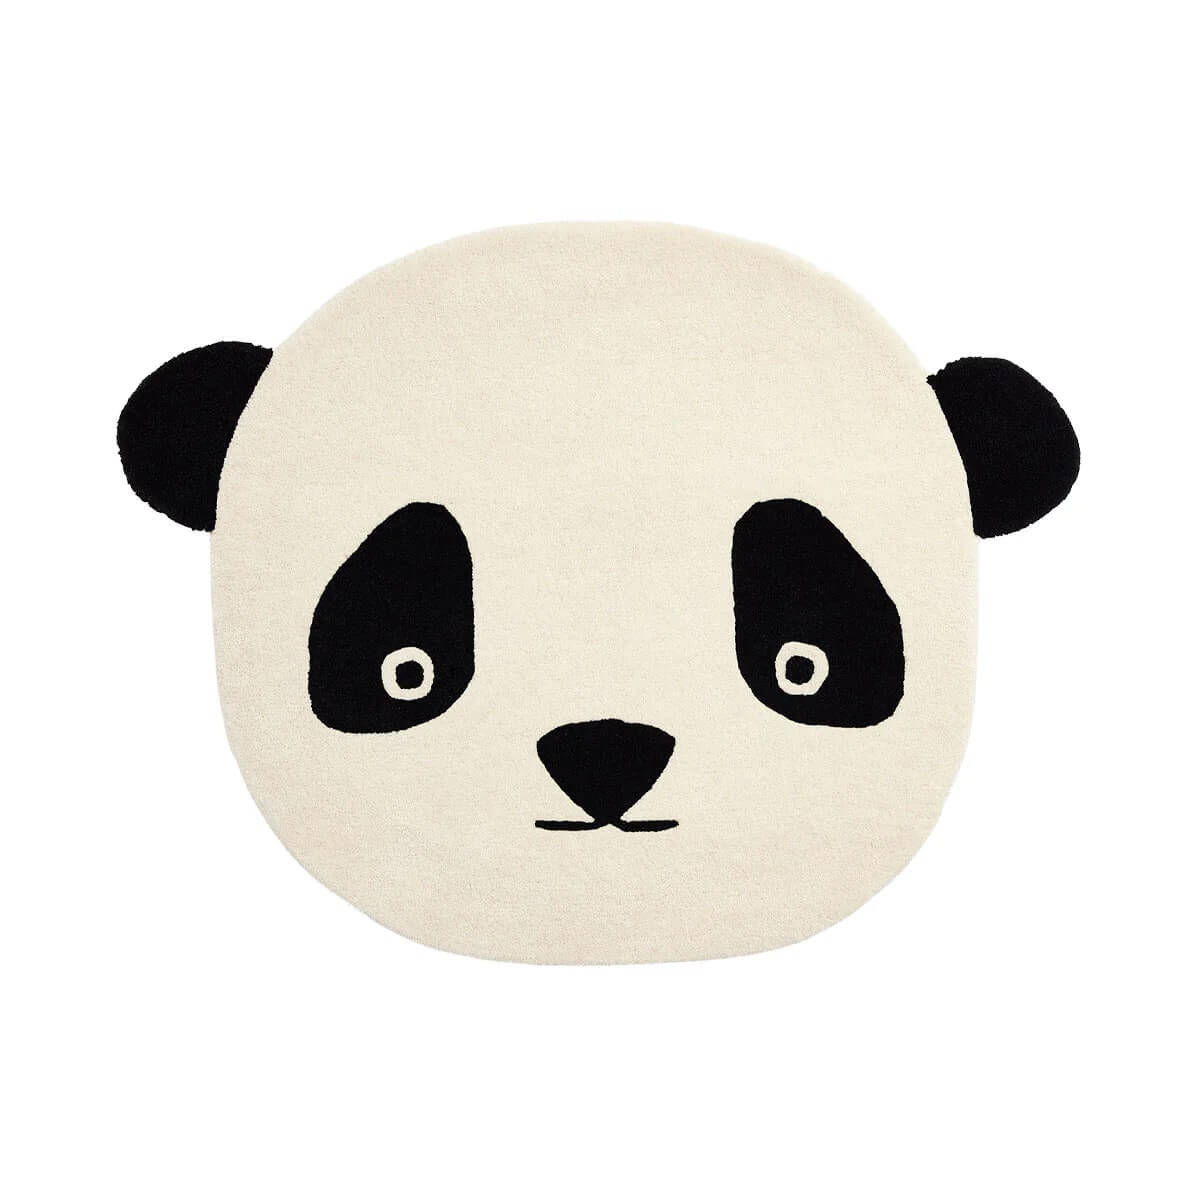 Kinderteppich "Panda"